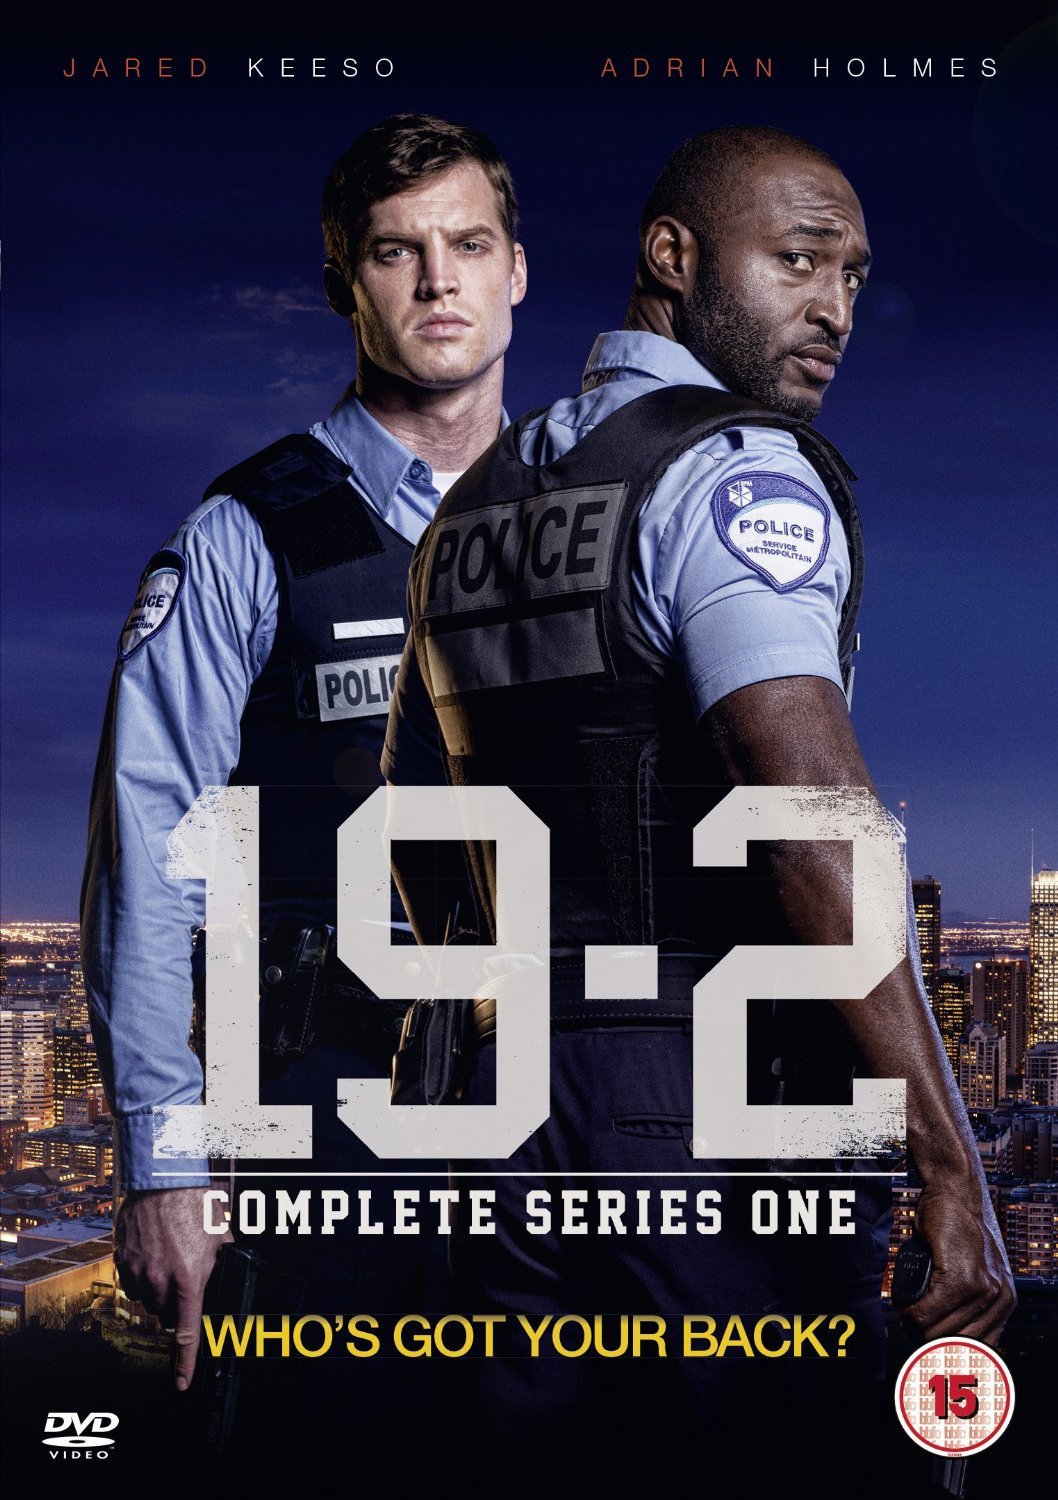 19-2 - Series 1 (DVD)